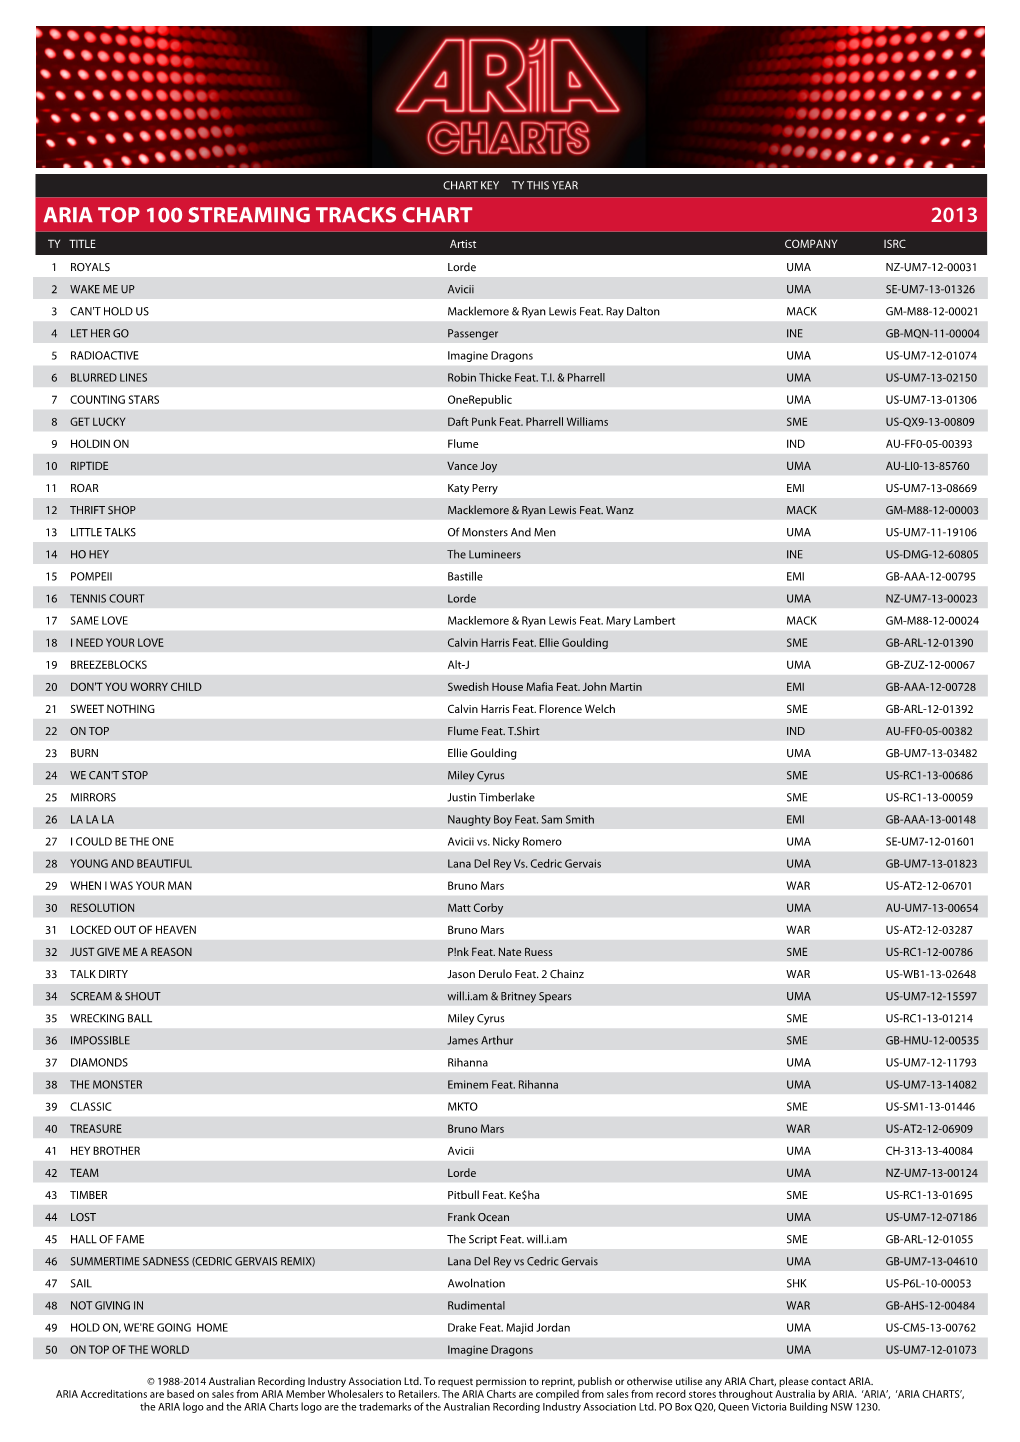 Aria Top 100 Streaming Tracks Chart 2013